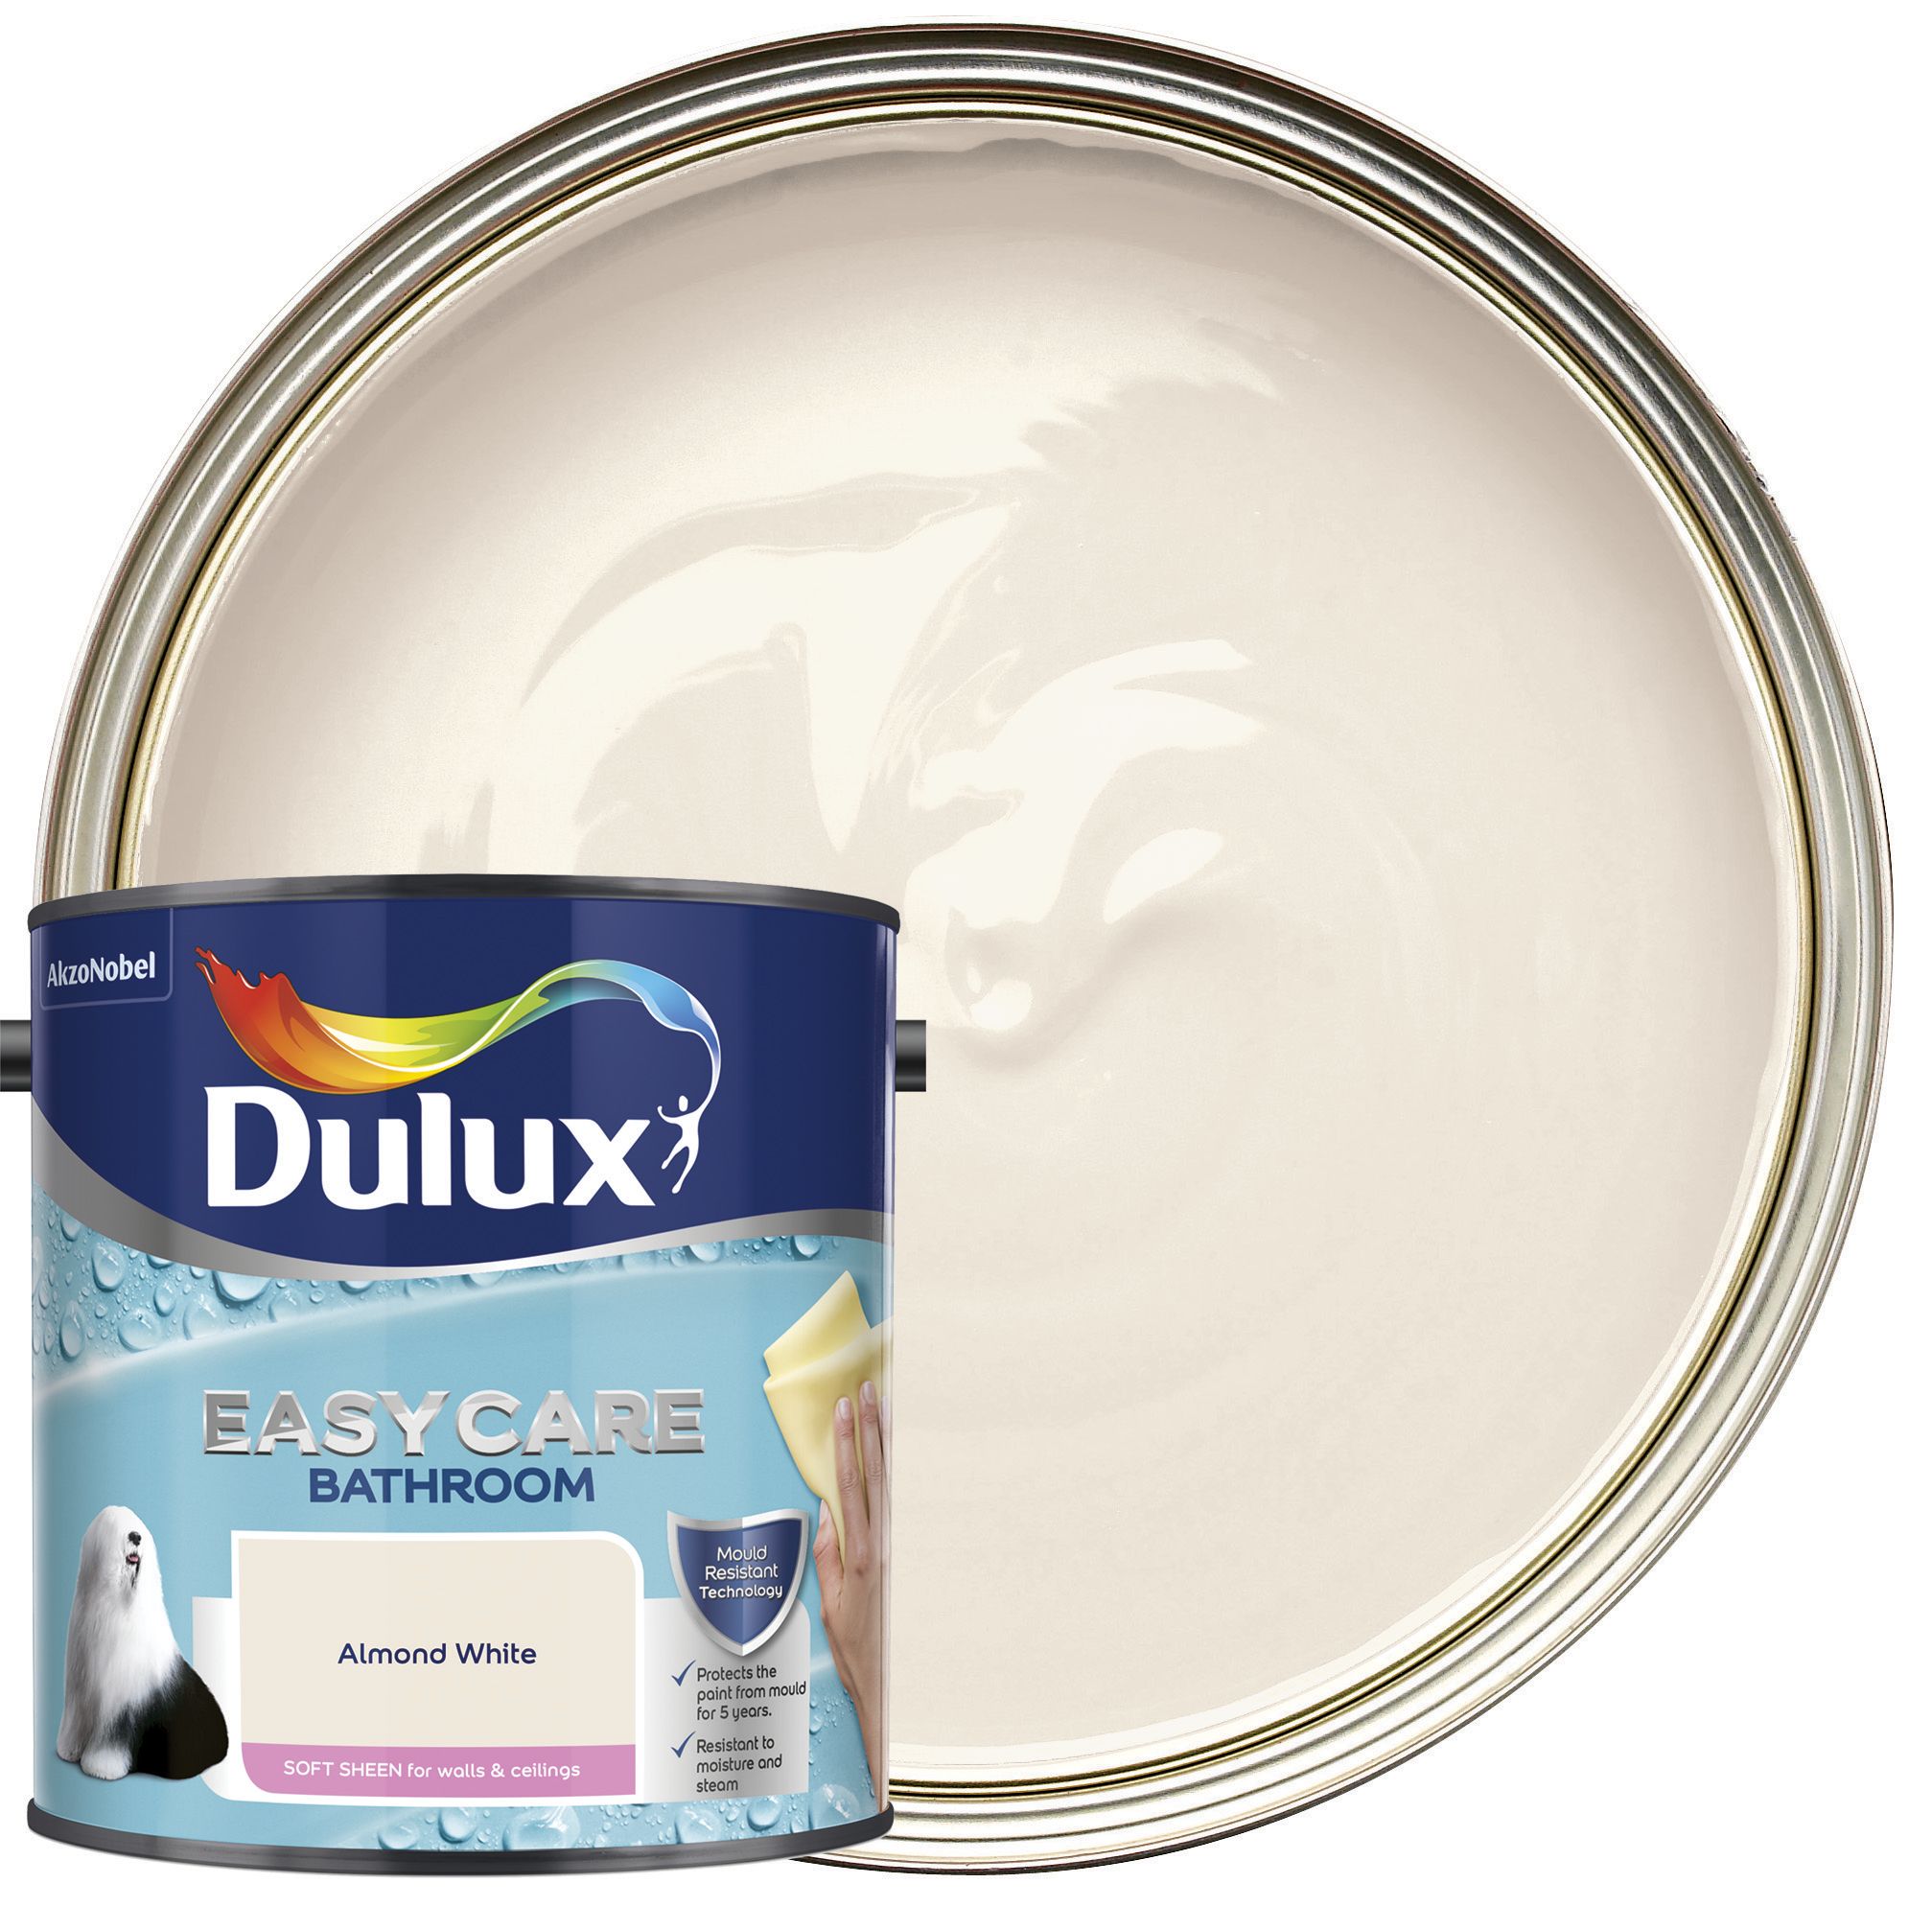 Dulux Easycare Bathroom Soft Sheen Emulsion Paint - Almond White - 2.5L